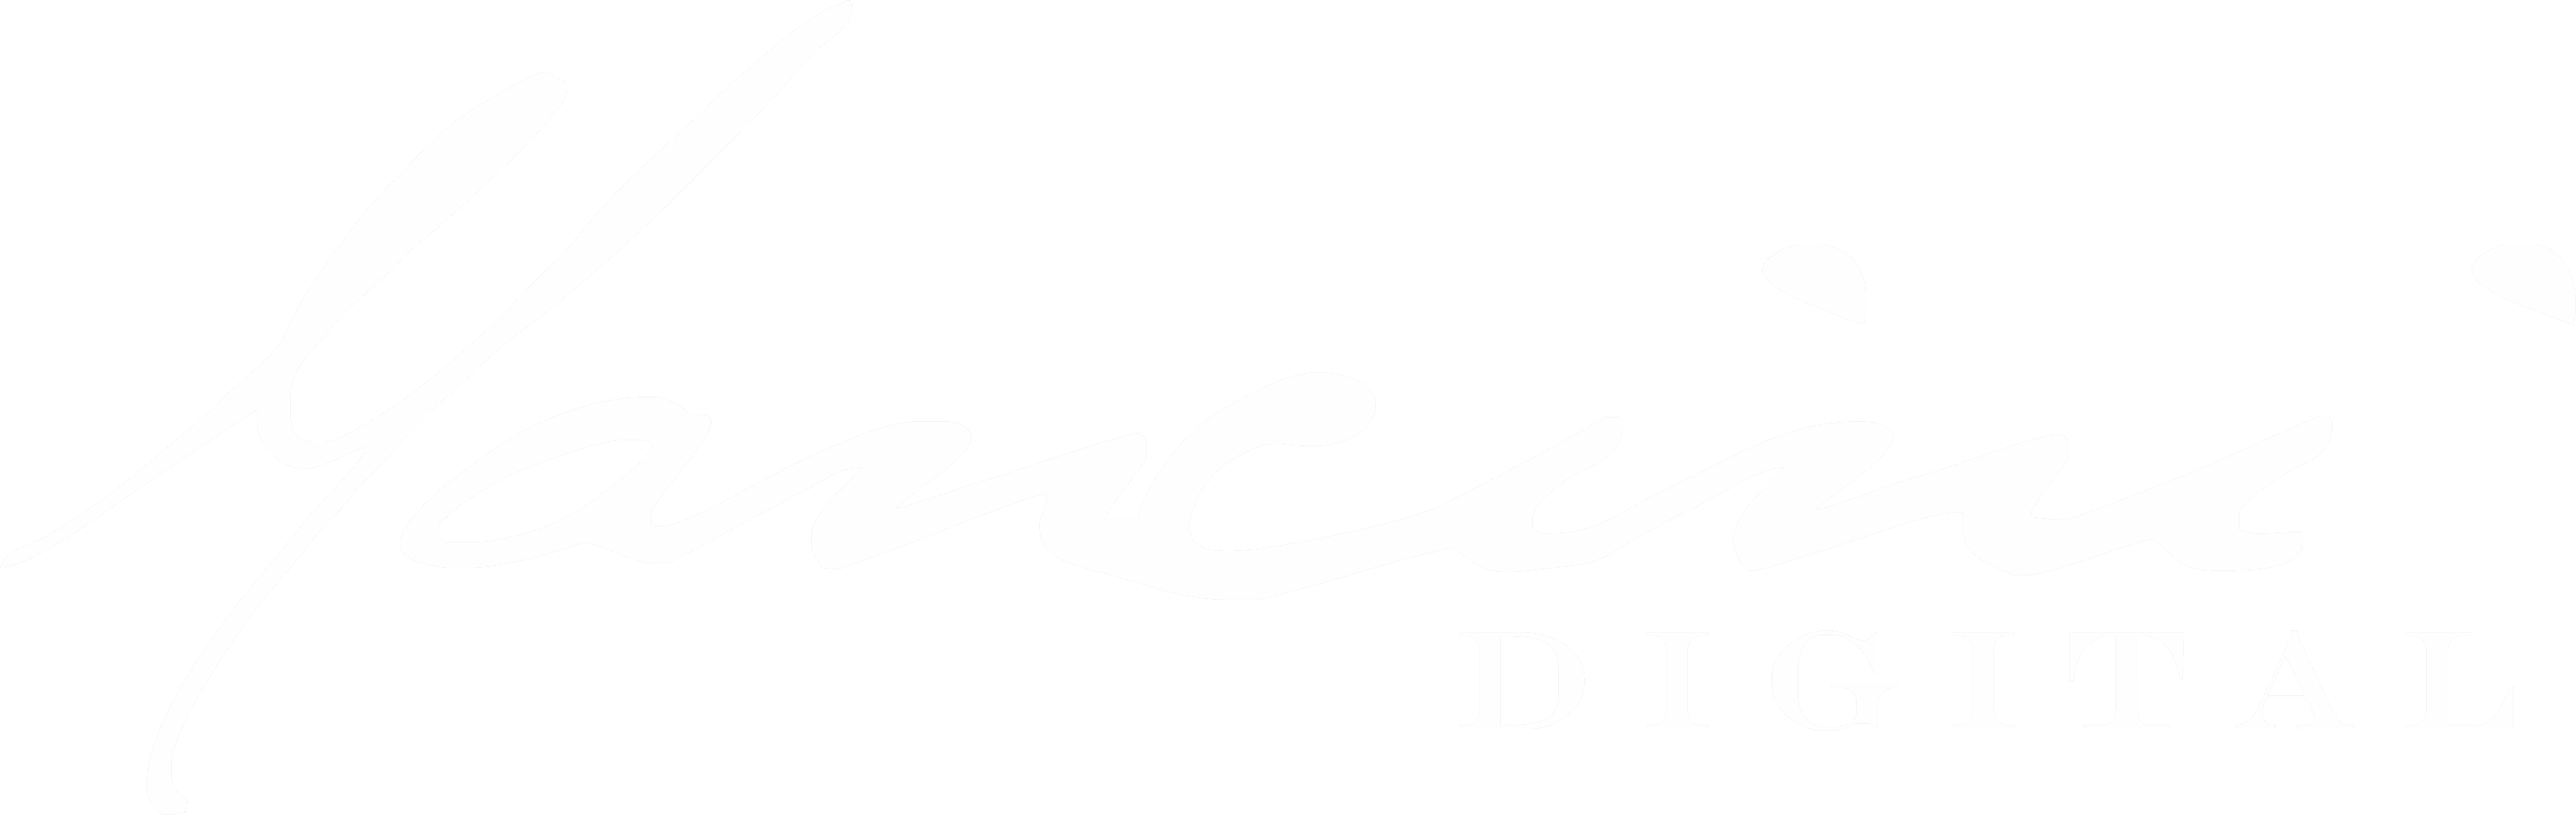 Mancini Digital